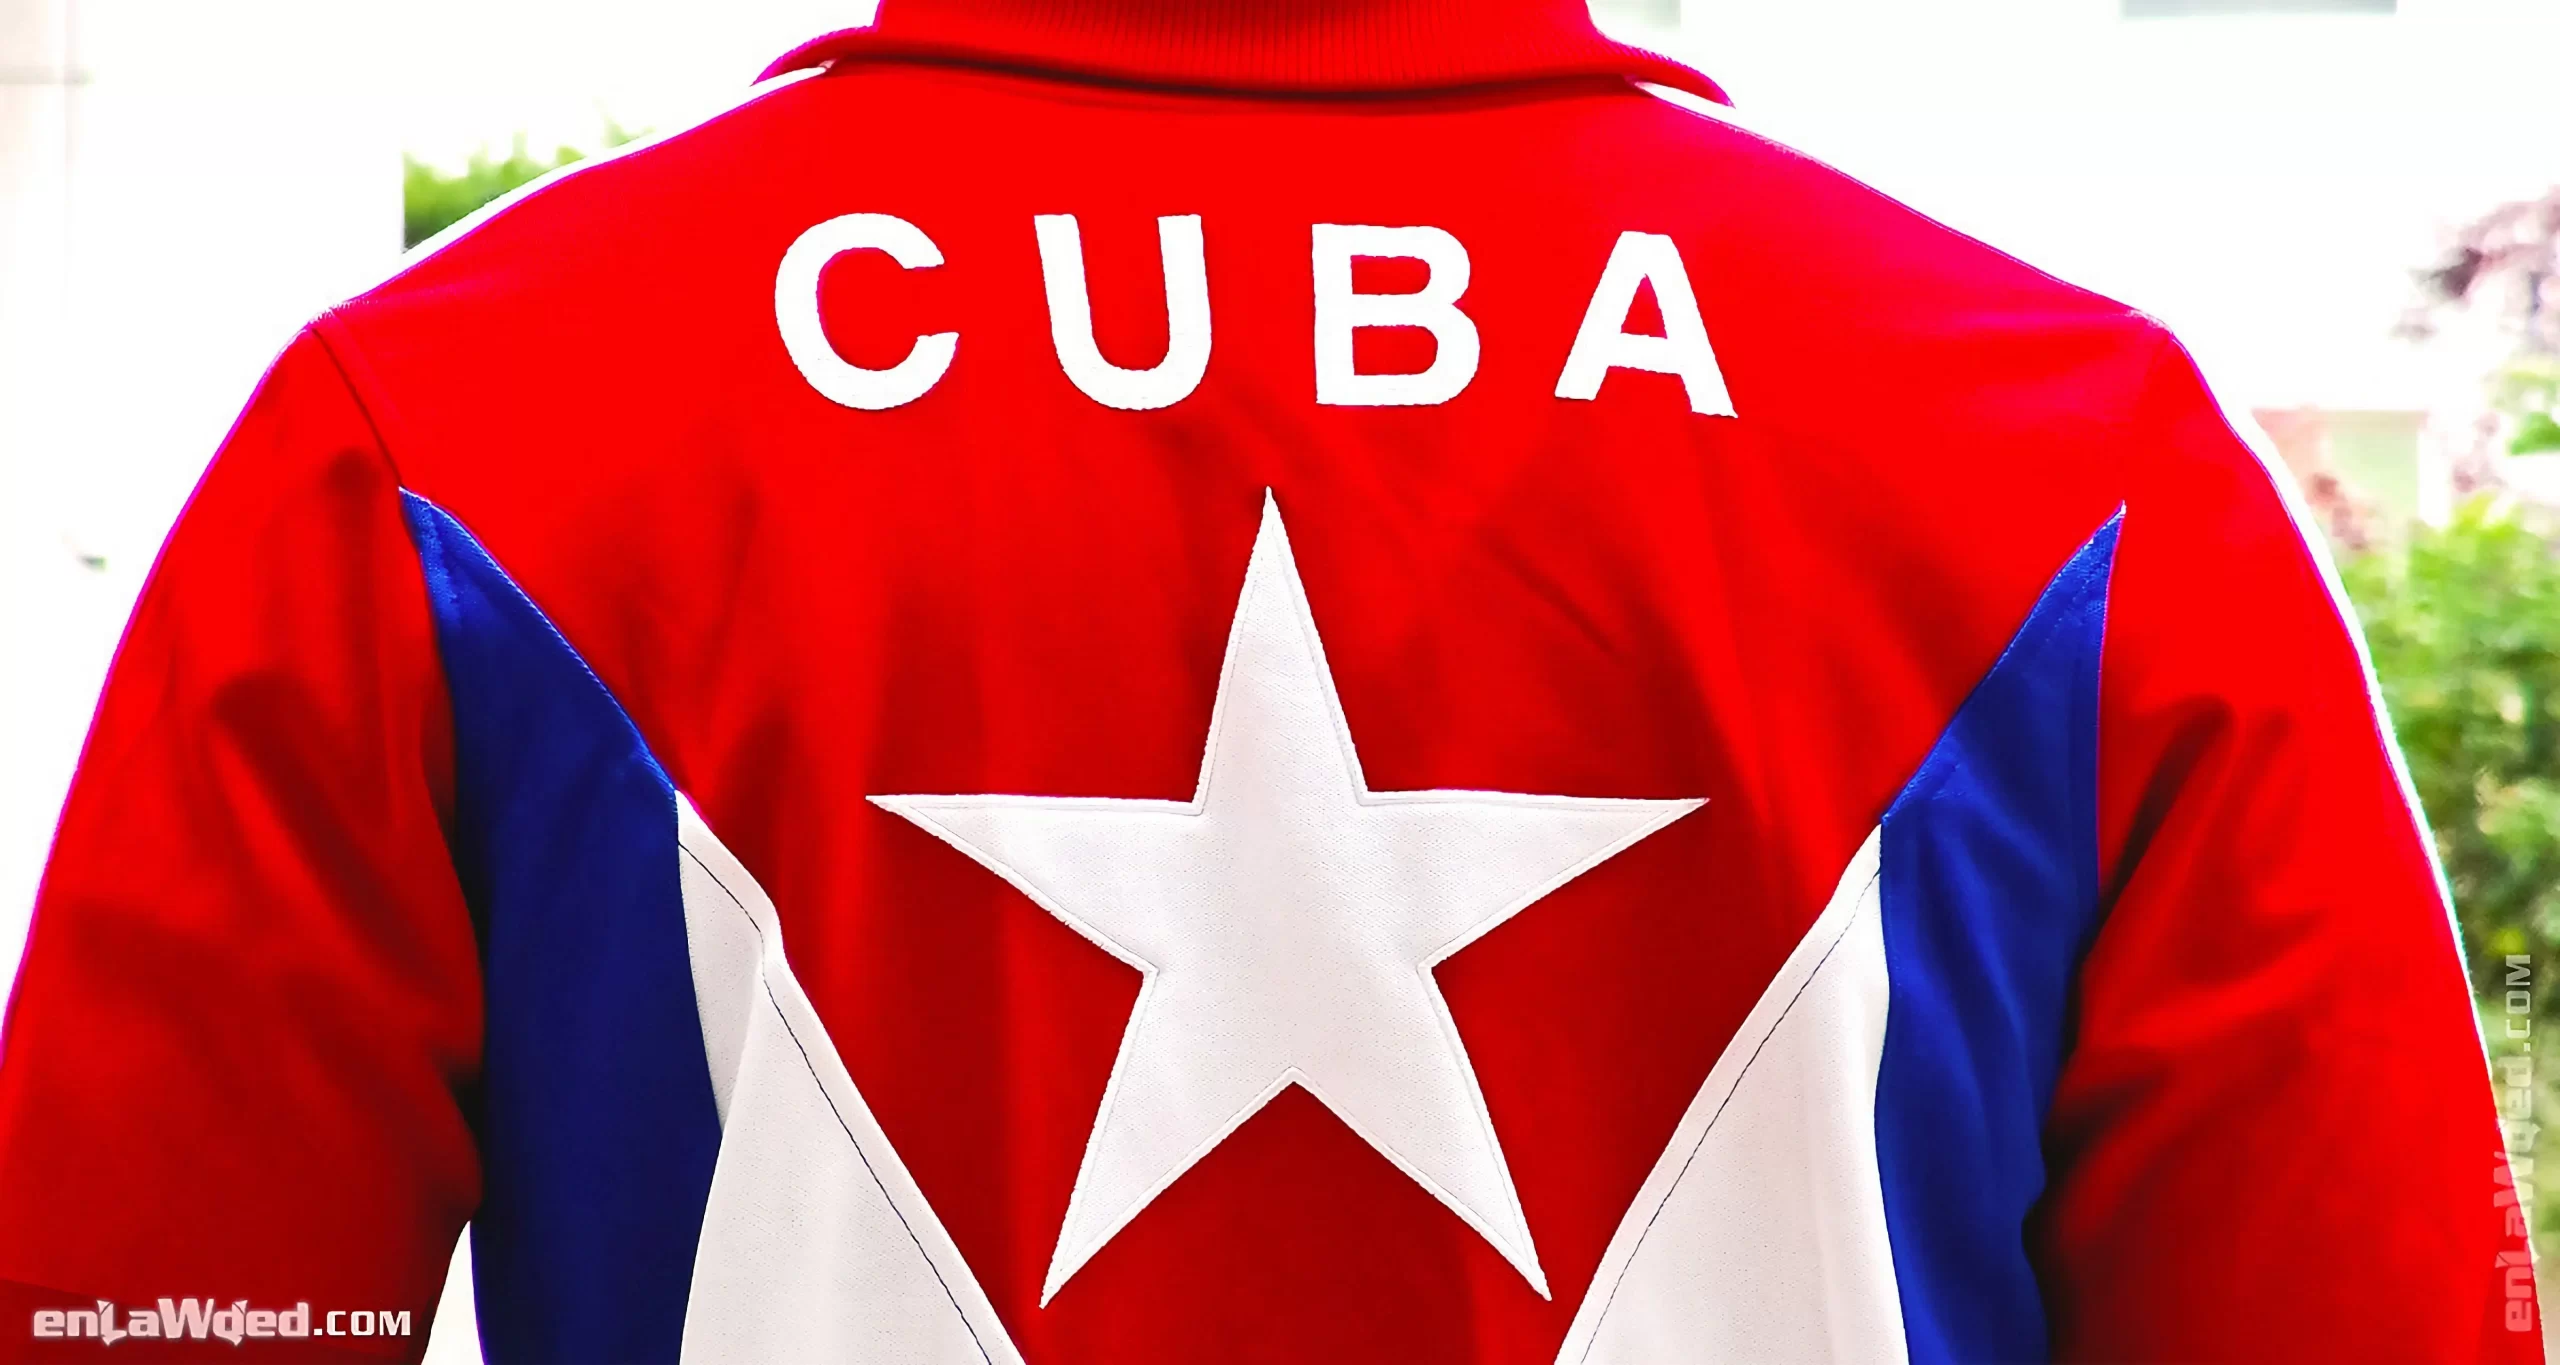 Men’s 2007 Cuba Track Top by Adidas Originals: Sublime (EnLawded.com file #lmchk89944ip2y121673kg9st)